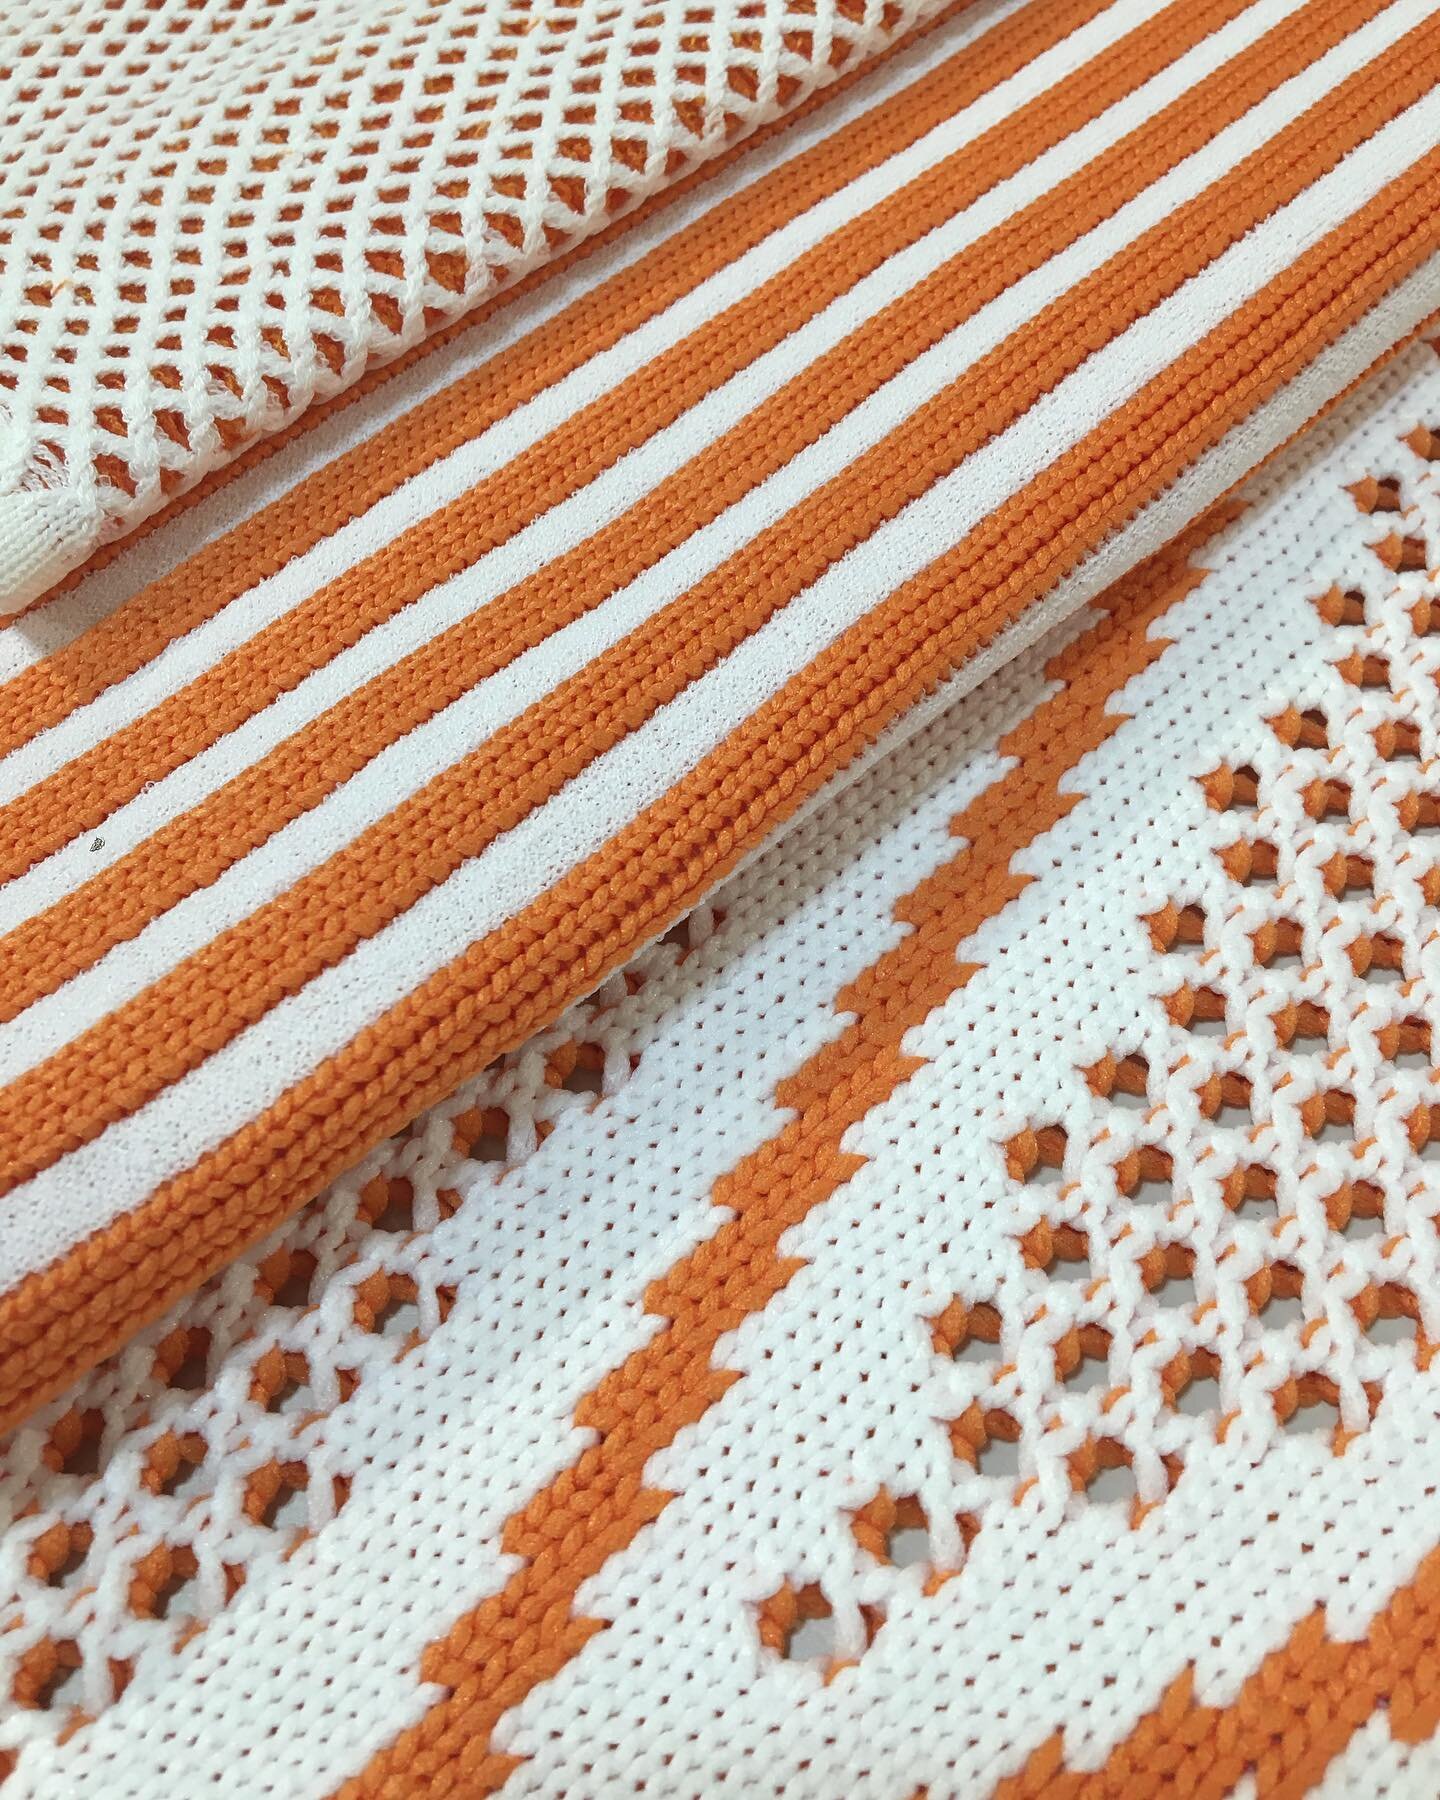 Sporty graphic stitches using SAWADA technical yarns. 🏀
Made by MRC

#knitwear
#shimaseiki
#mrcknitwear
#japaneseyarns
#madeinItaly
#innovation
#textiles
#technicaltextiles
#activewear
#sport
#mesh
#knitwearstudio
#knitlab